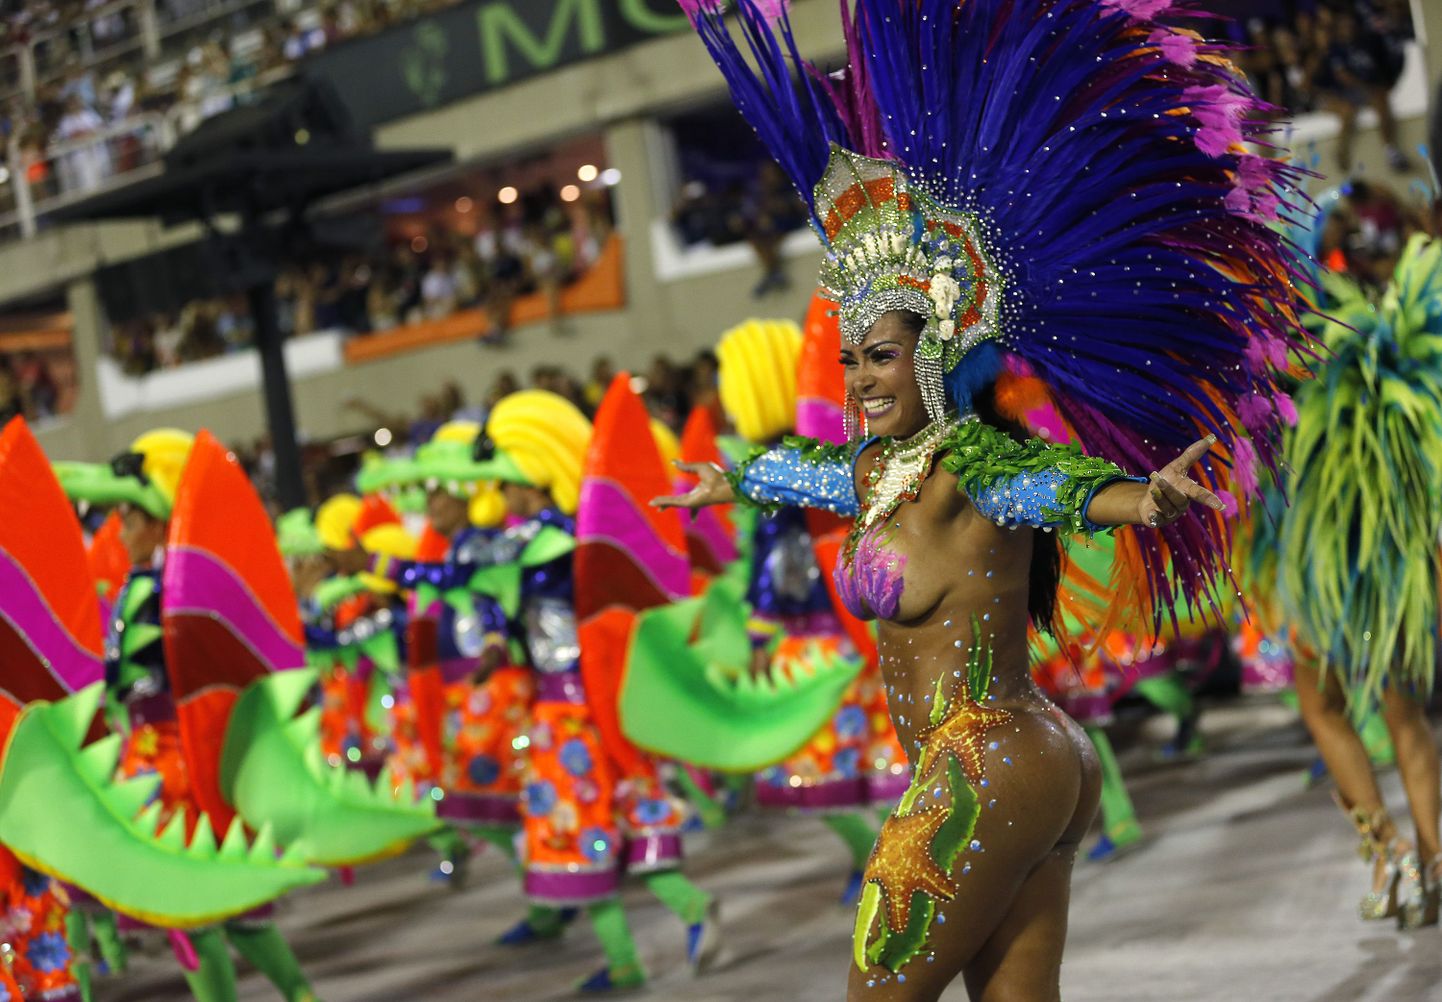 A performer from the Uniao da Ilha samba school dances during Carnival celebrations at the Sambadrome in Rio de Janeiro, Brazil, Sunday, Feb. 7, 2016. (AP Photo/Silvia Izquierdo)